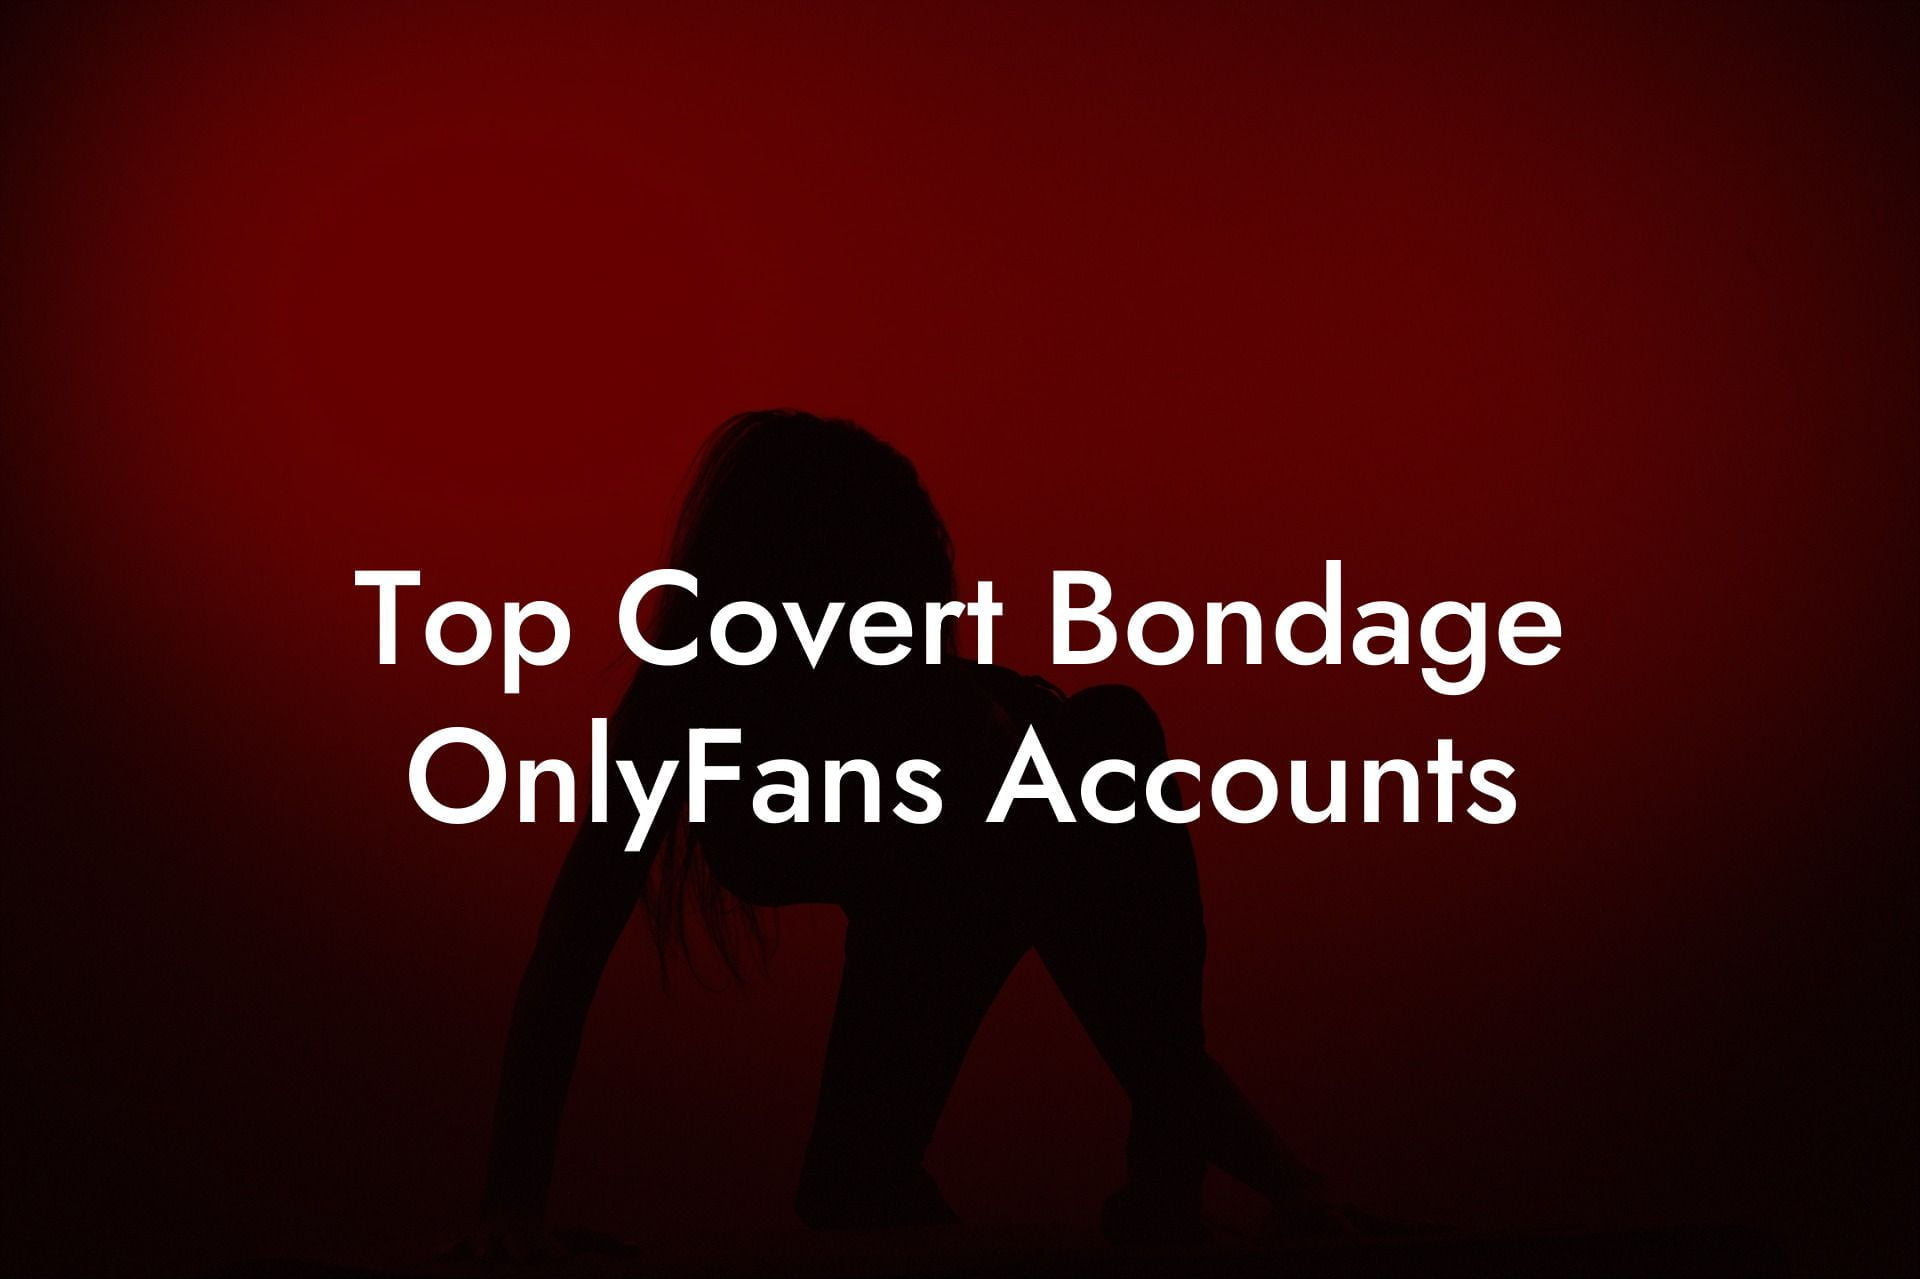 Top Covert Bondage OnlyFans Accounts